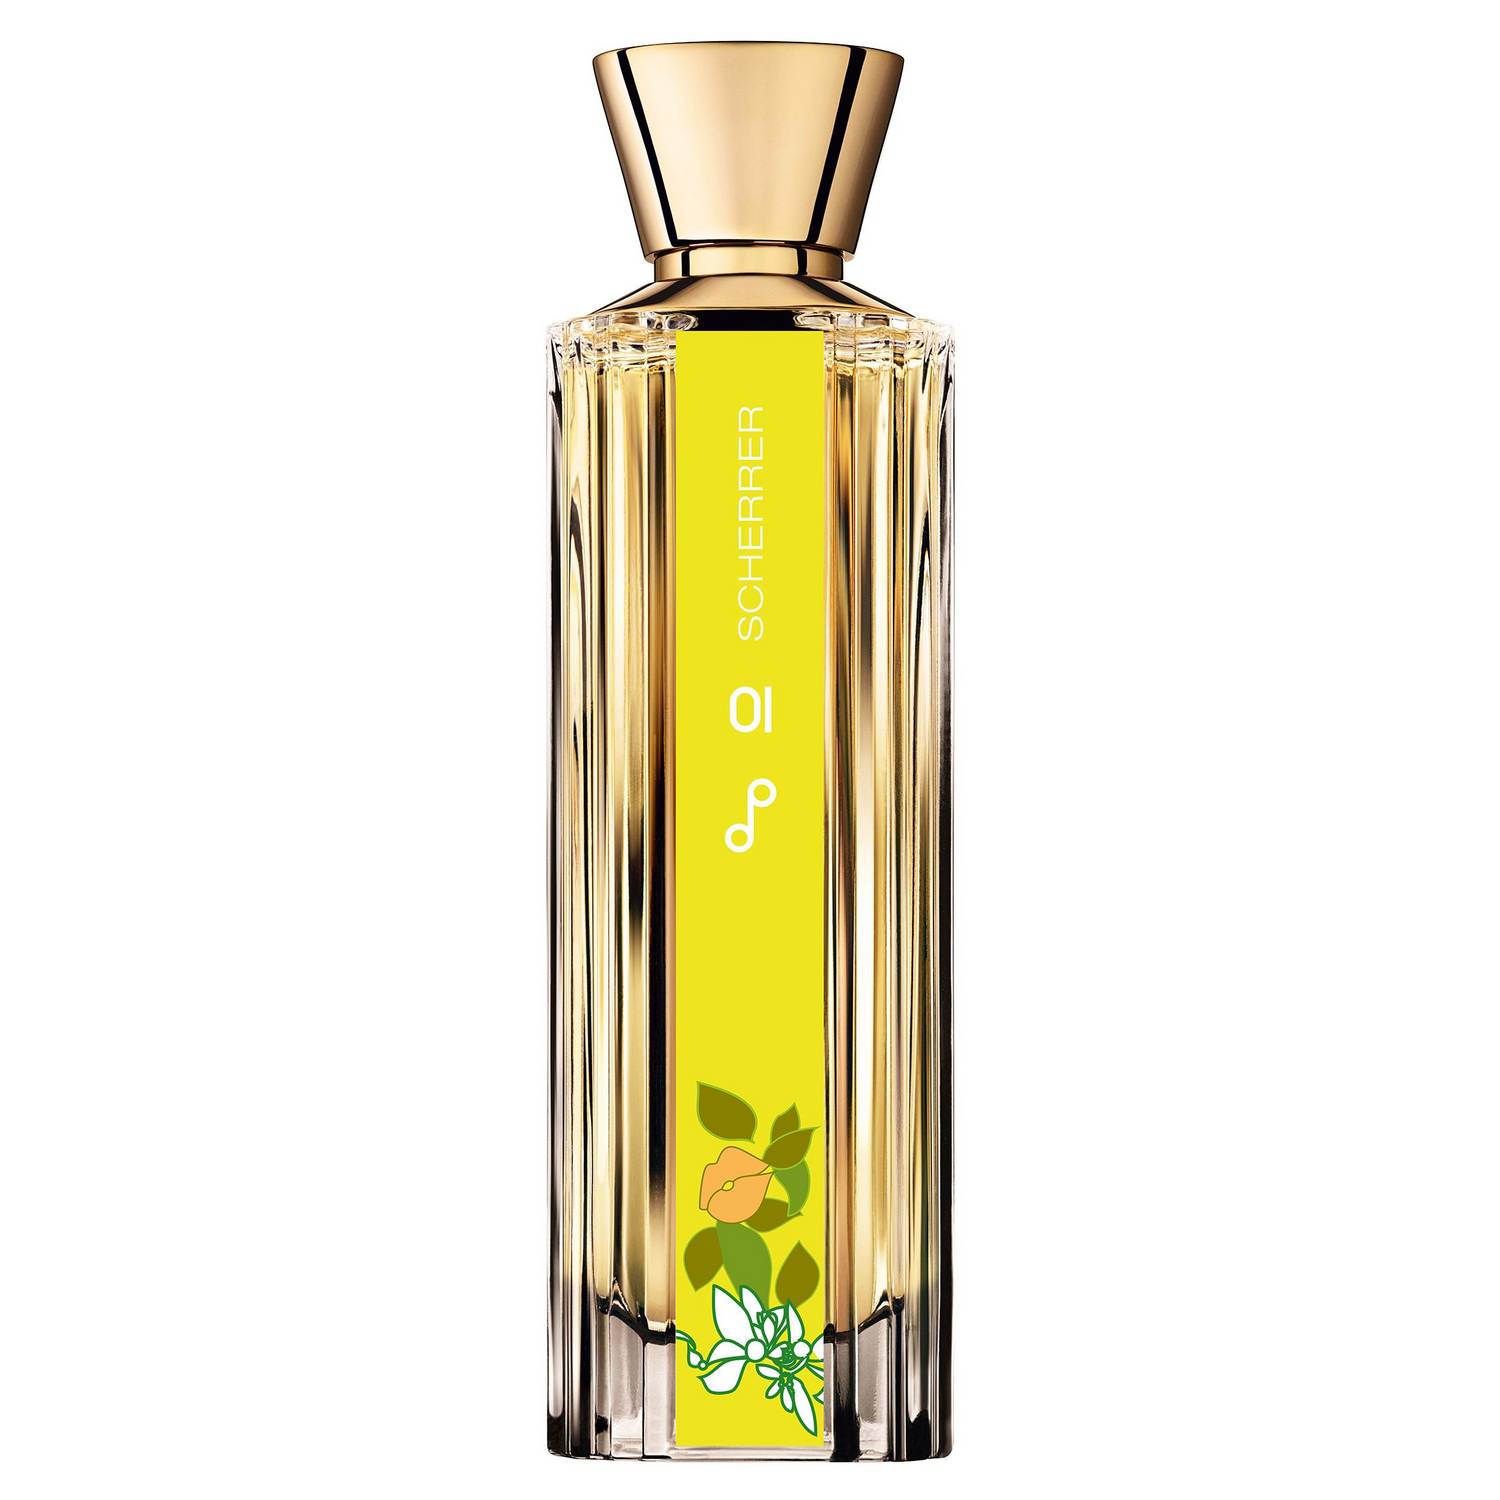 Pop Delights 01 Jean-Louis Scherrer perfume - a fragrance for women 2017